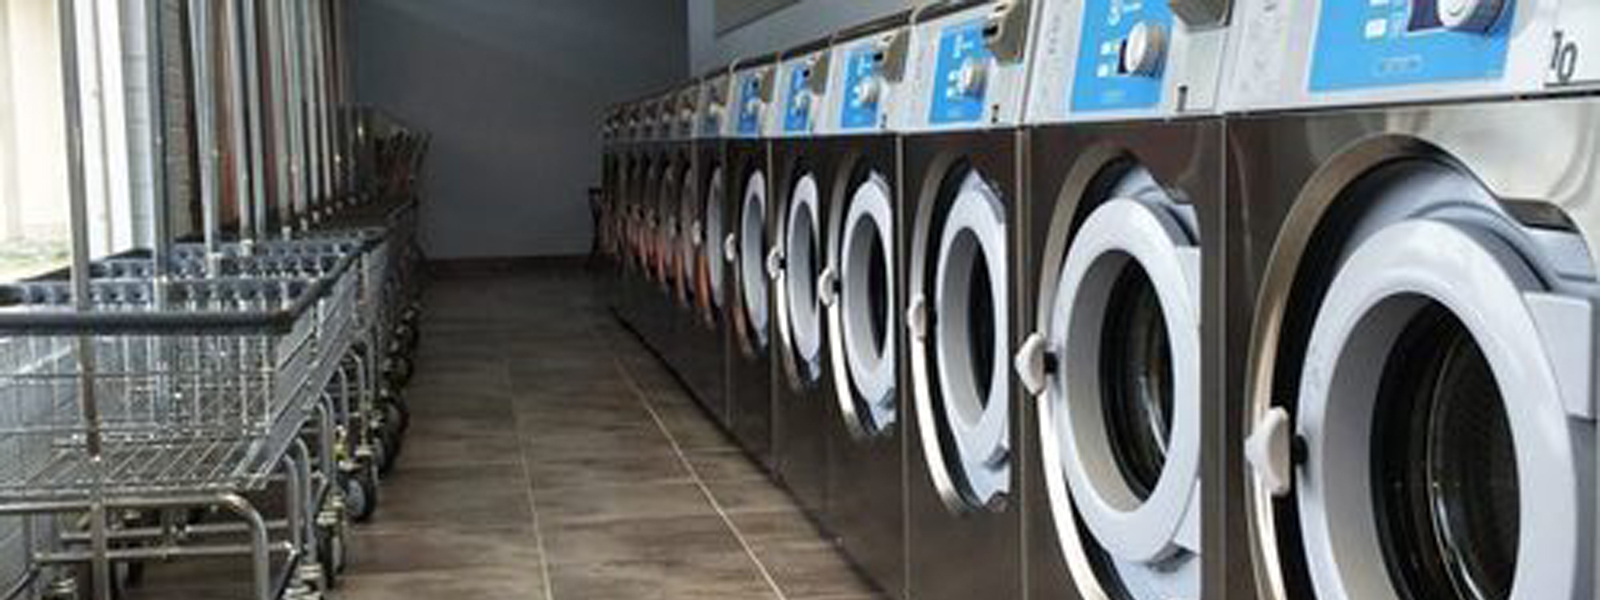 Laundry Management Software Bahrain 